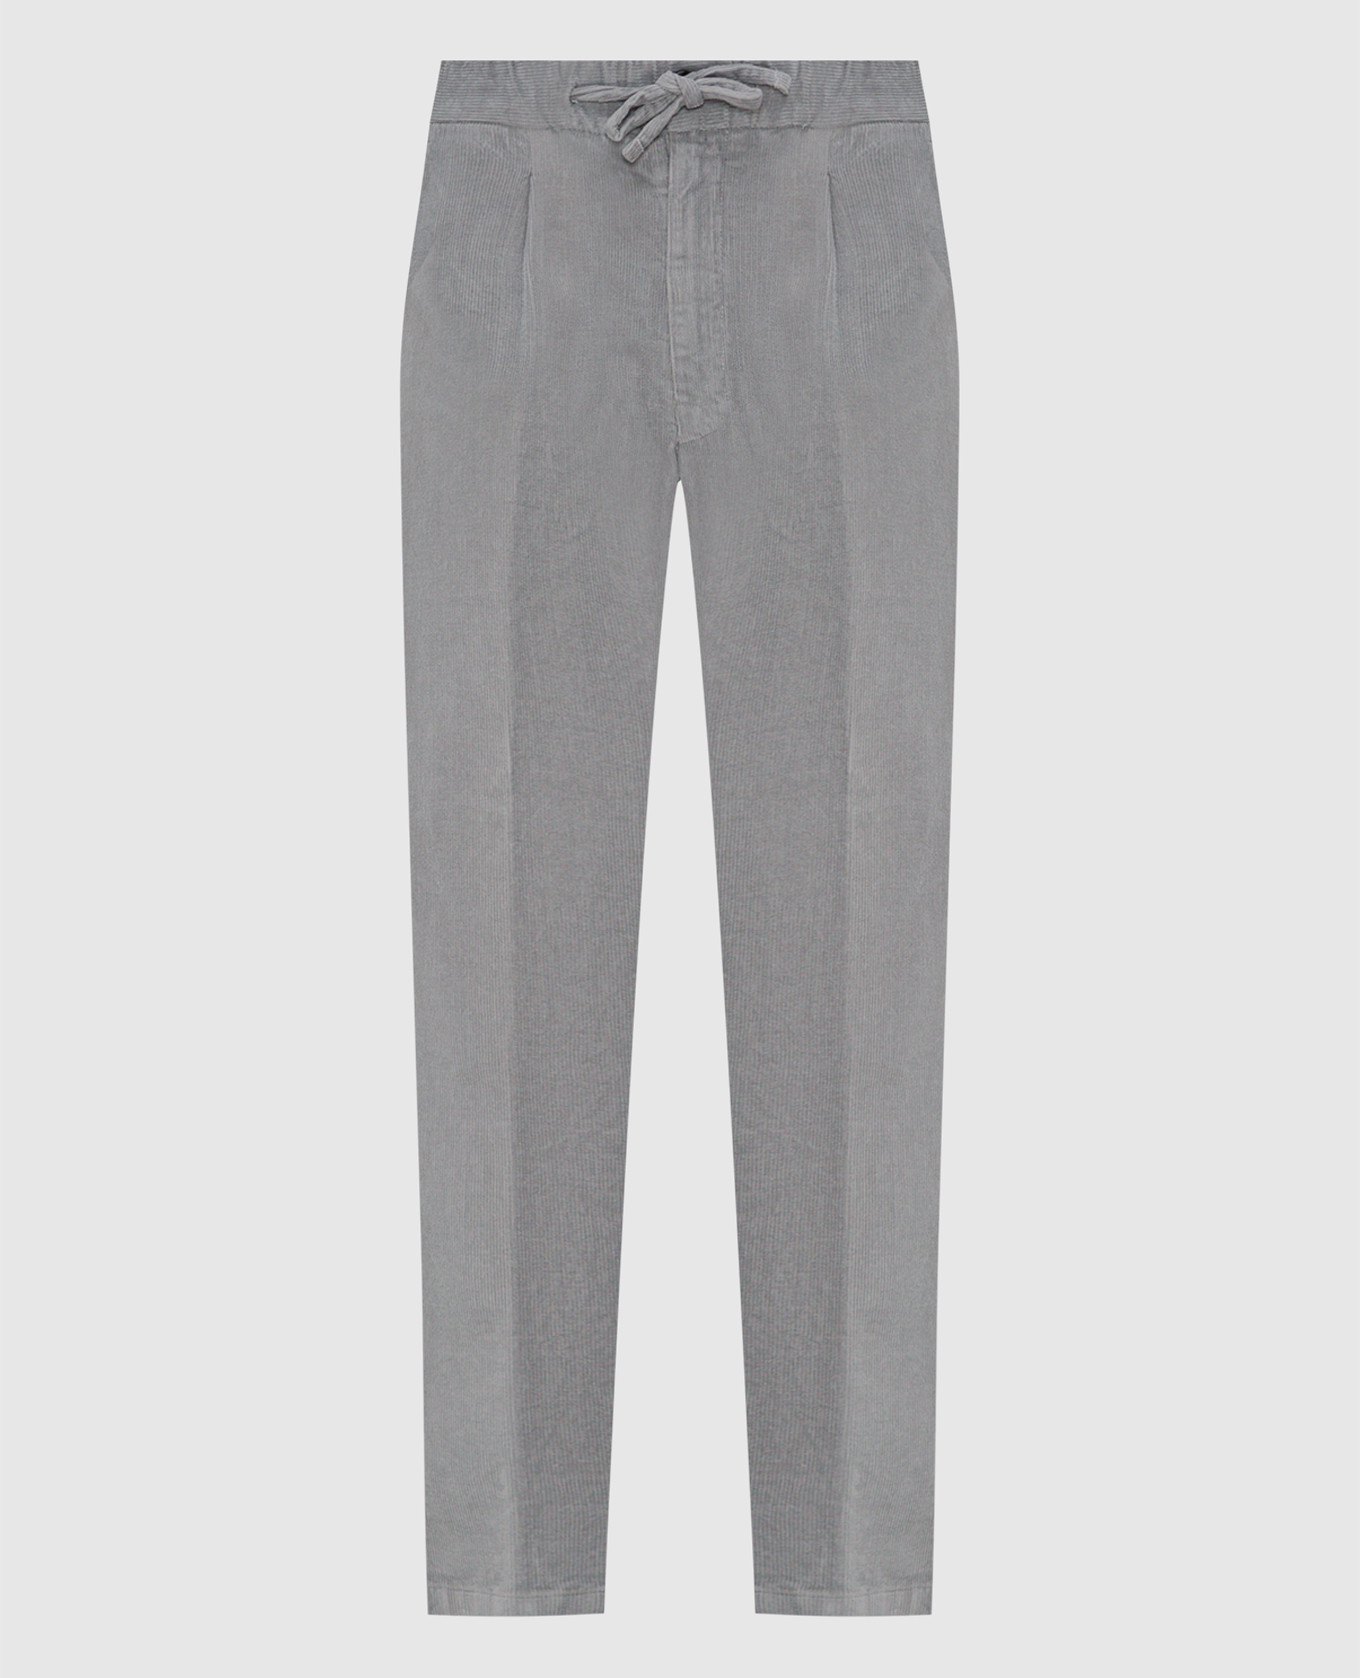 Gray corduroy pants